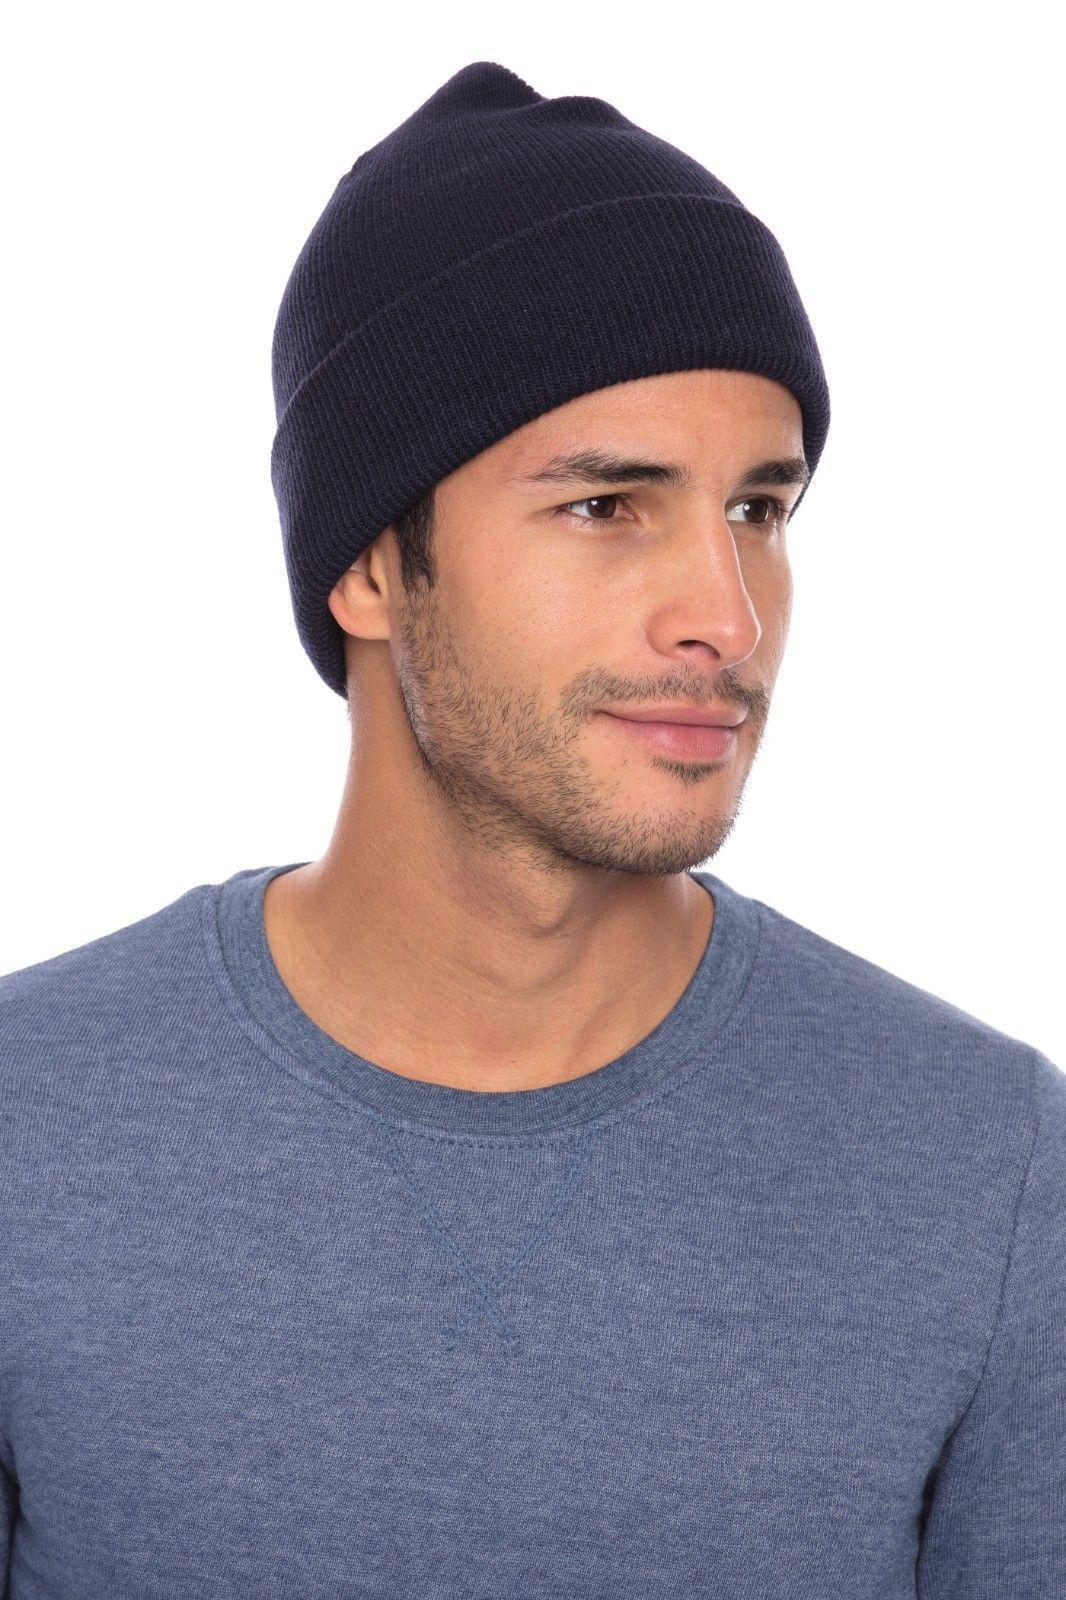 Casaba Warm Beanies Toboggan Cuffed Knit Slouch Winter Caps Hats Mens ...